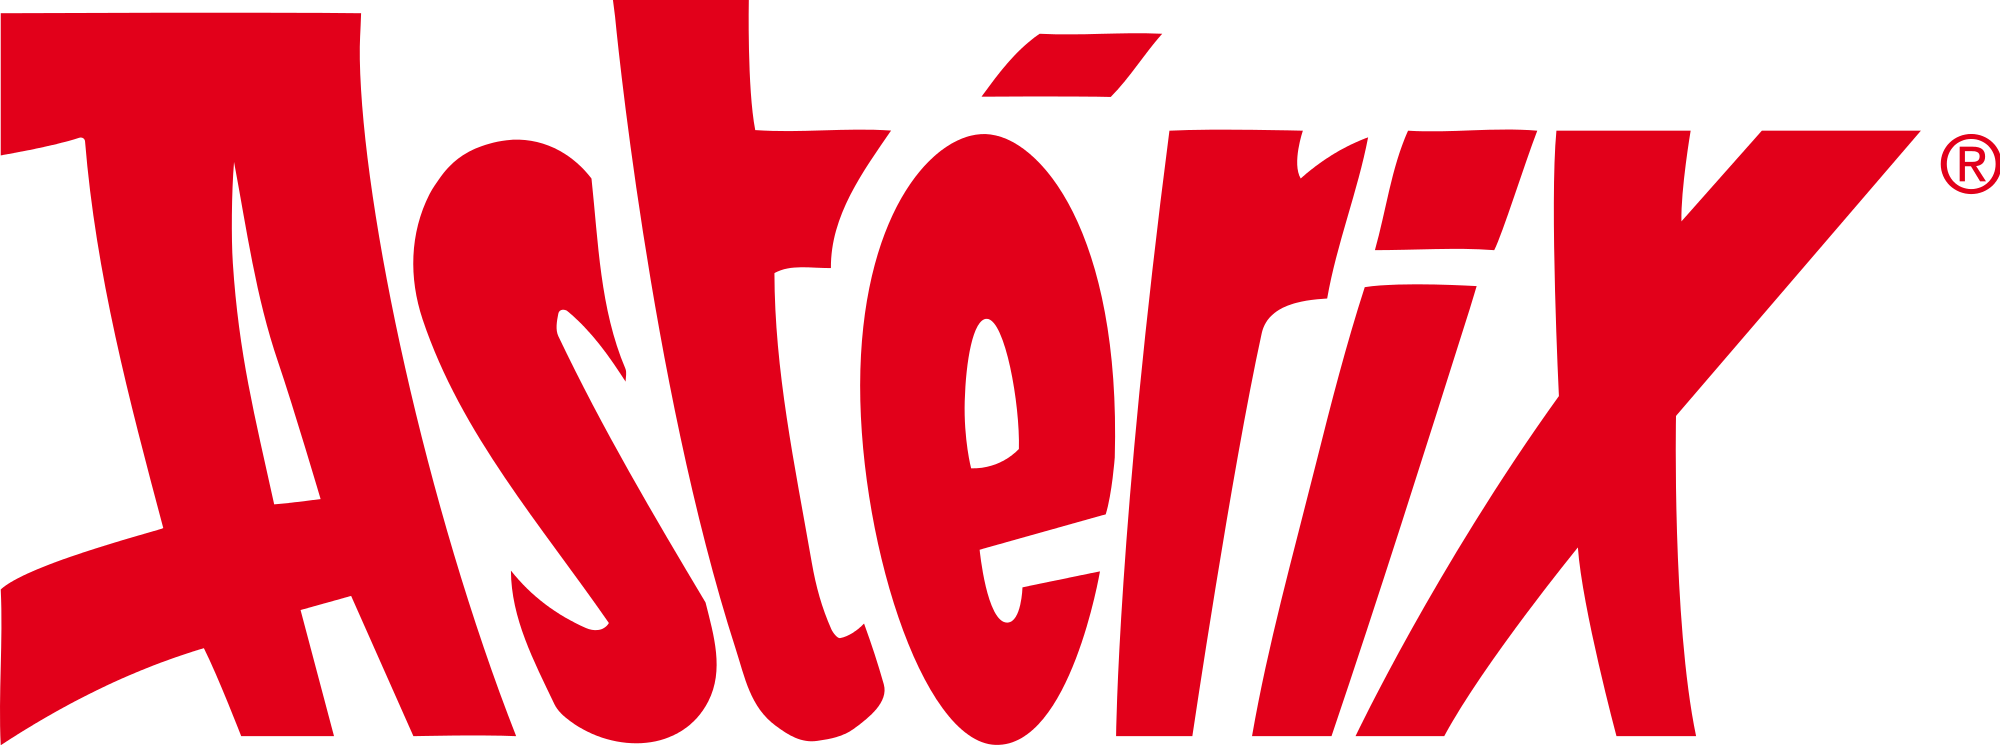 Download Asterix Logo